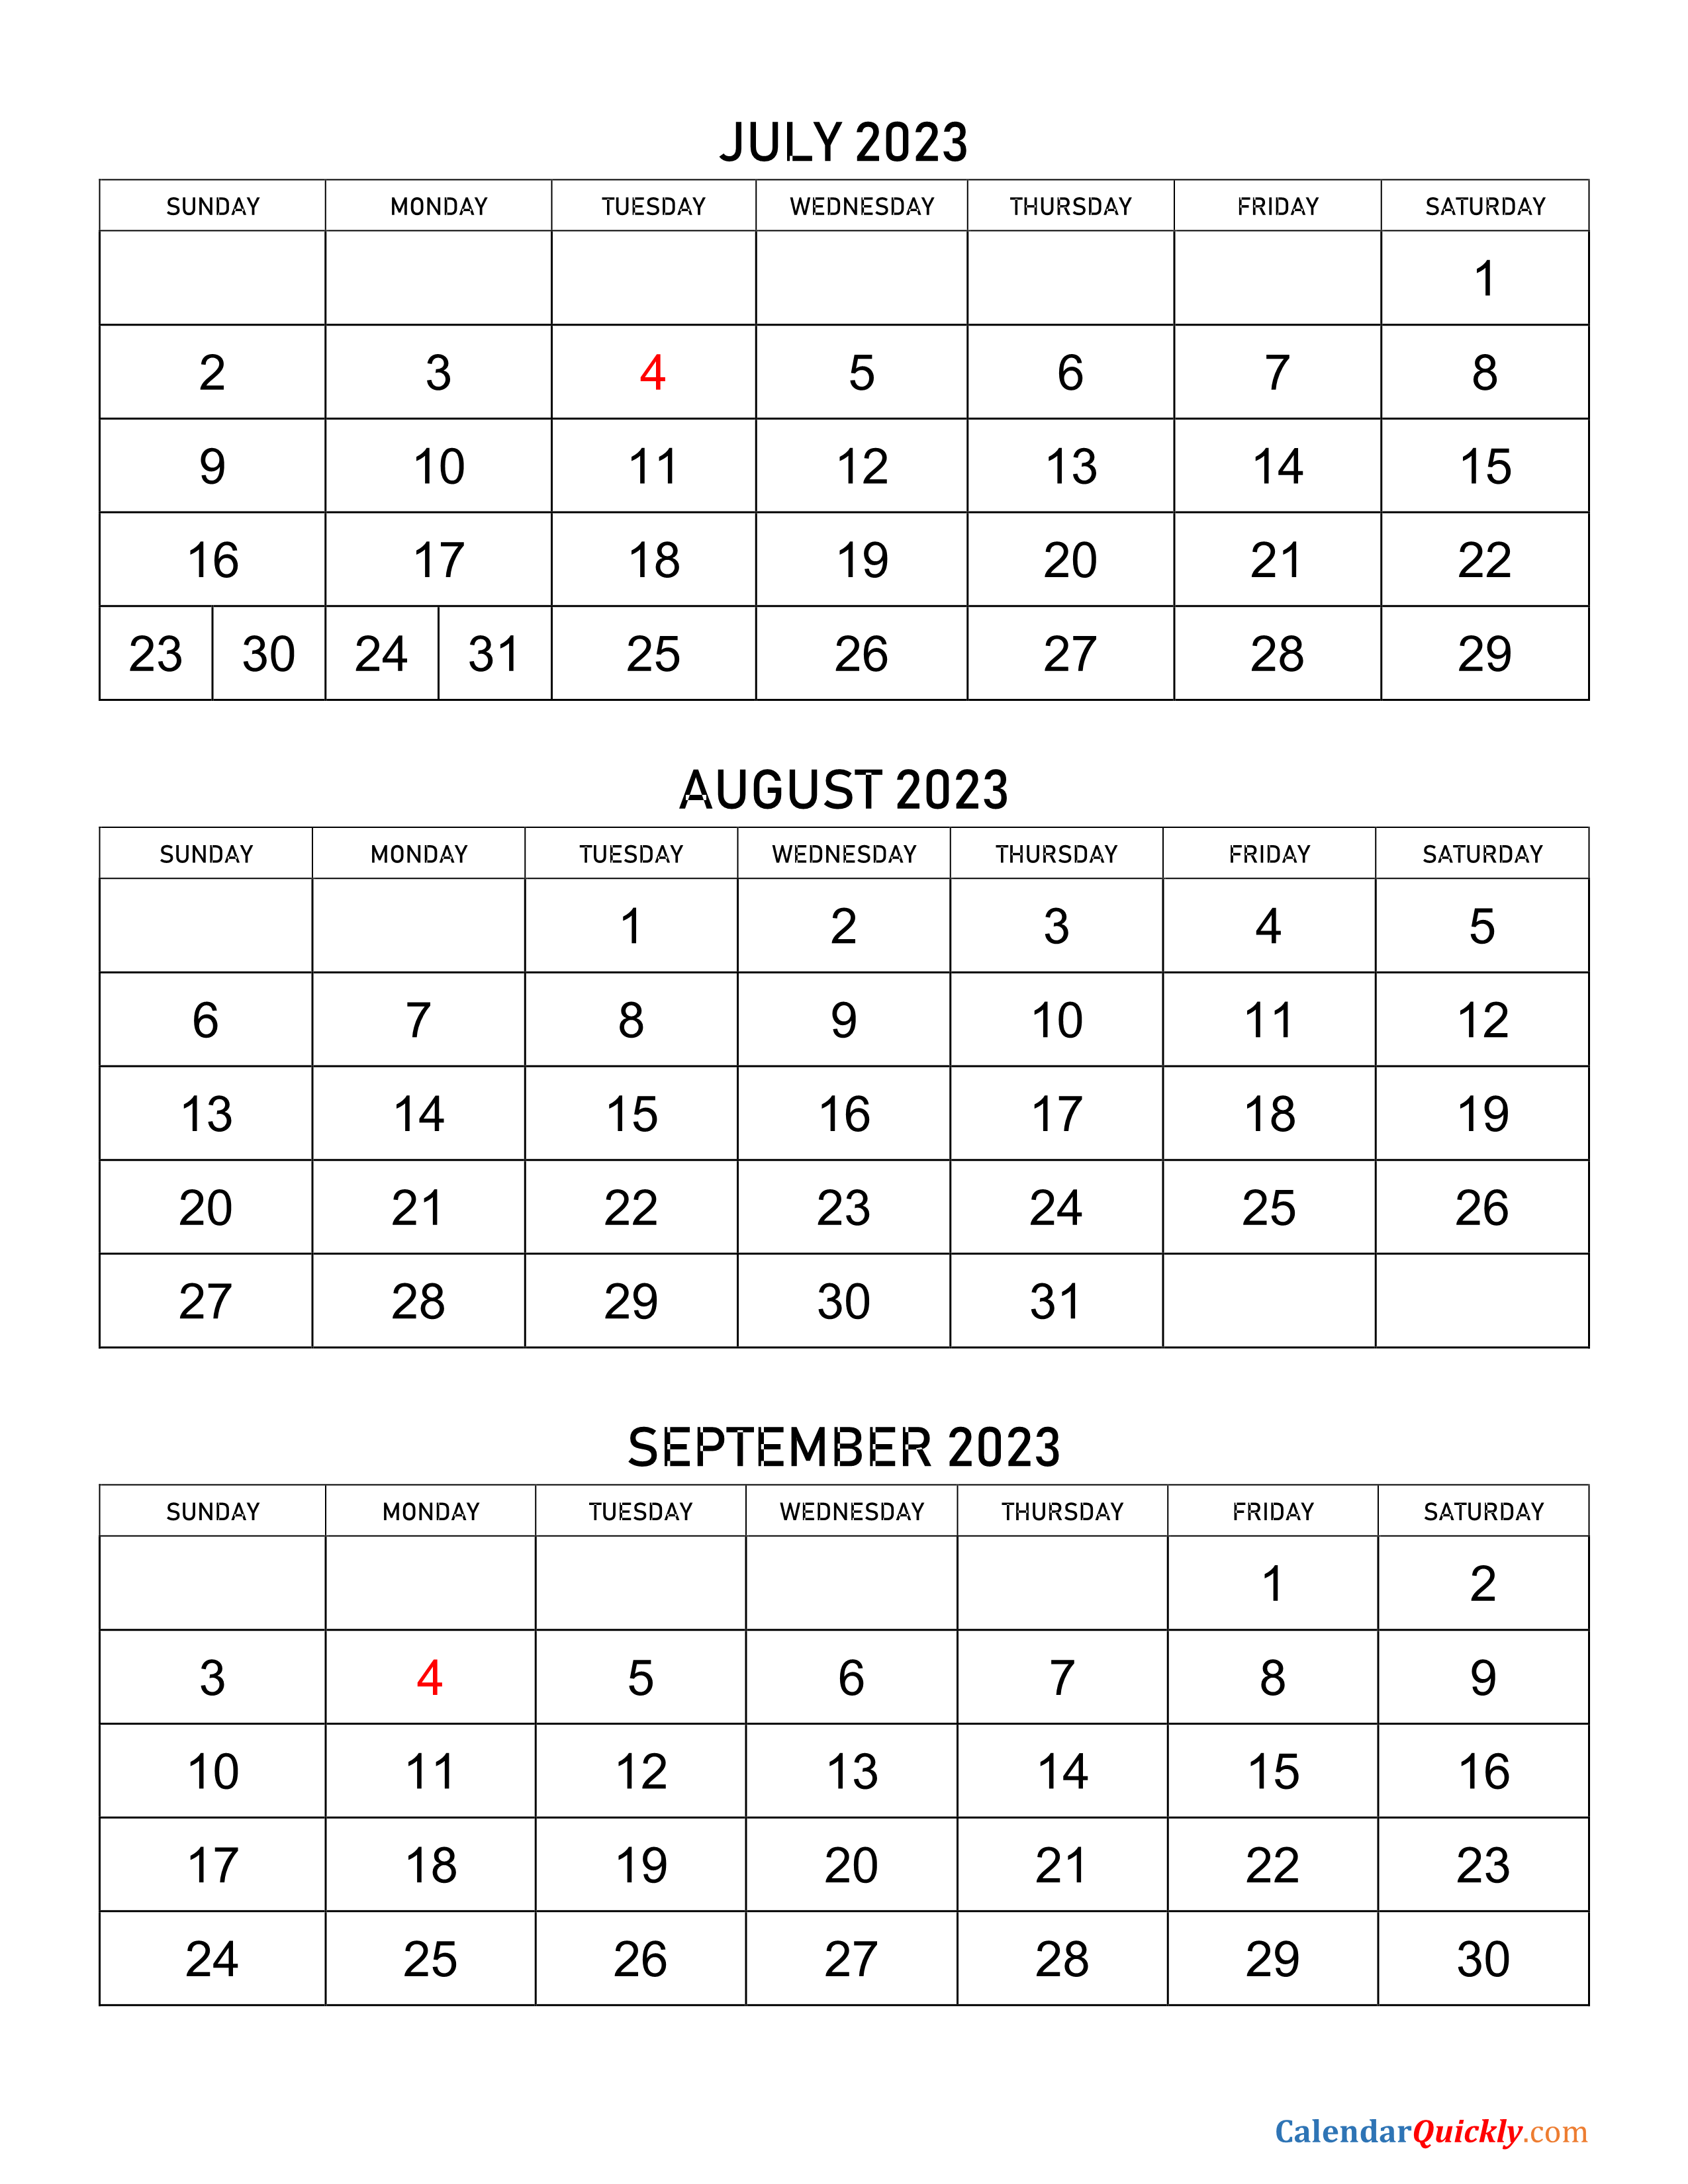 Gambar Kalender September 2023 Kalender 2023 September 2023 2023 Porn 